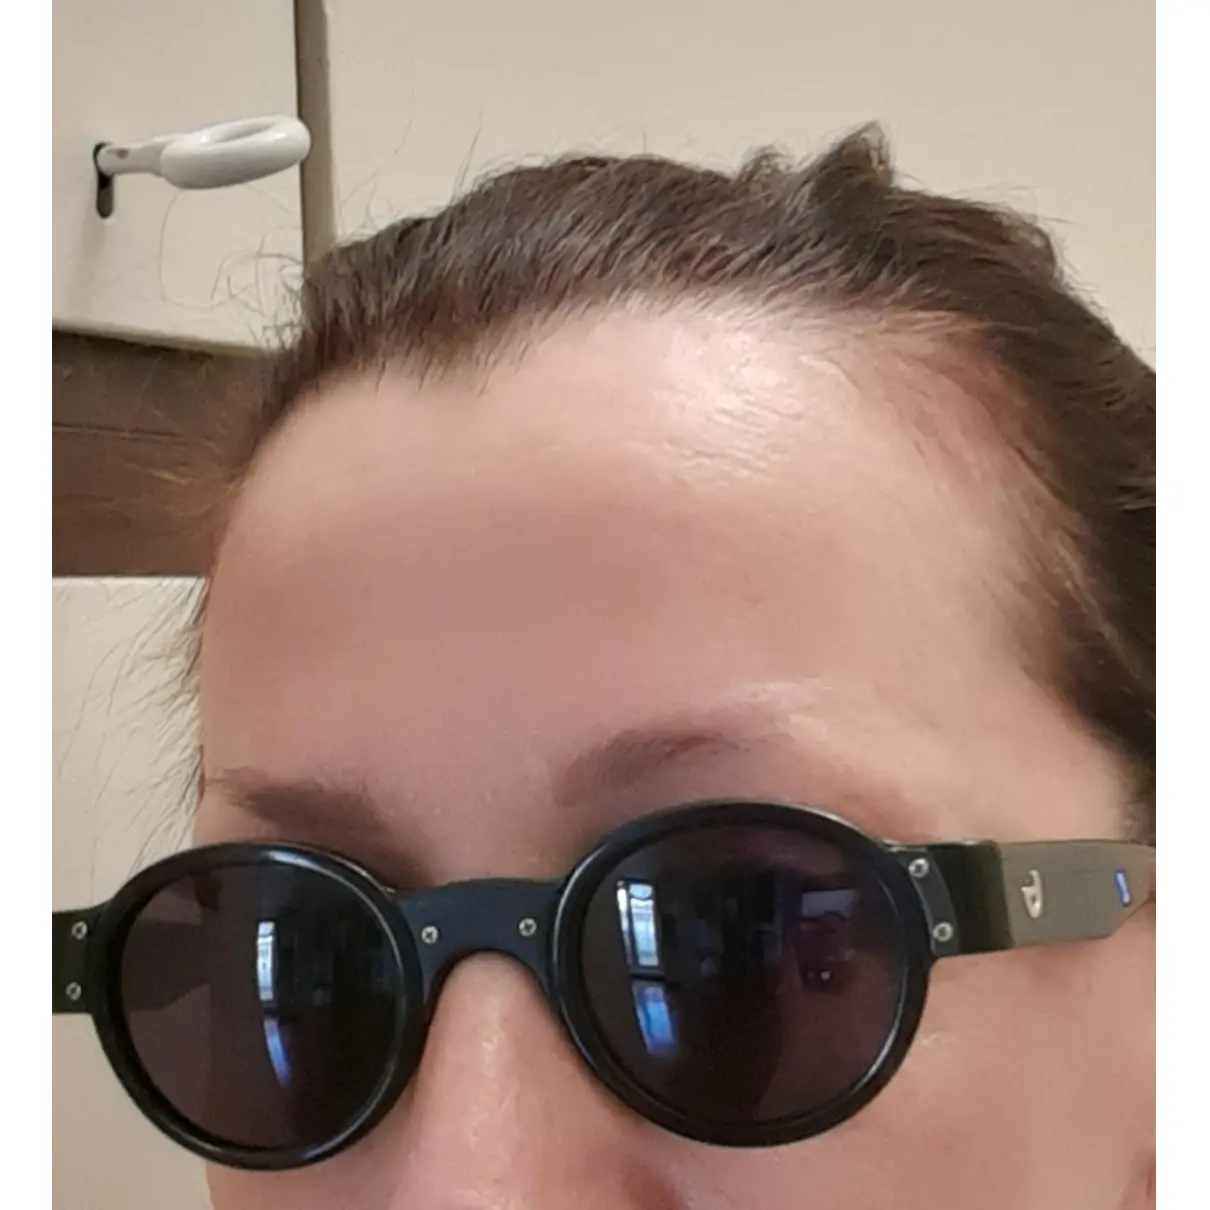 Sunglasses Byblos